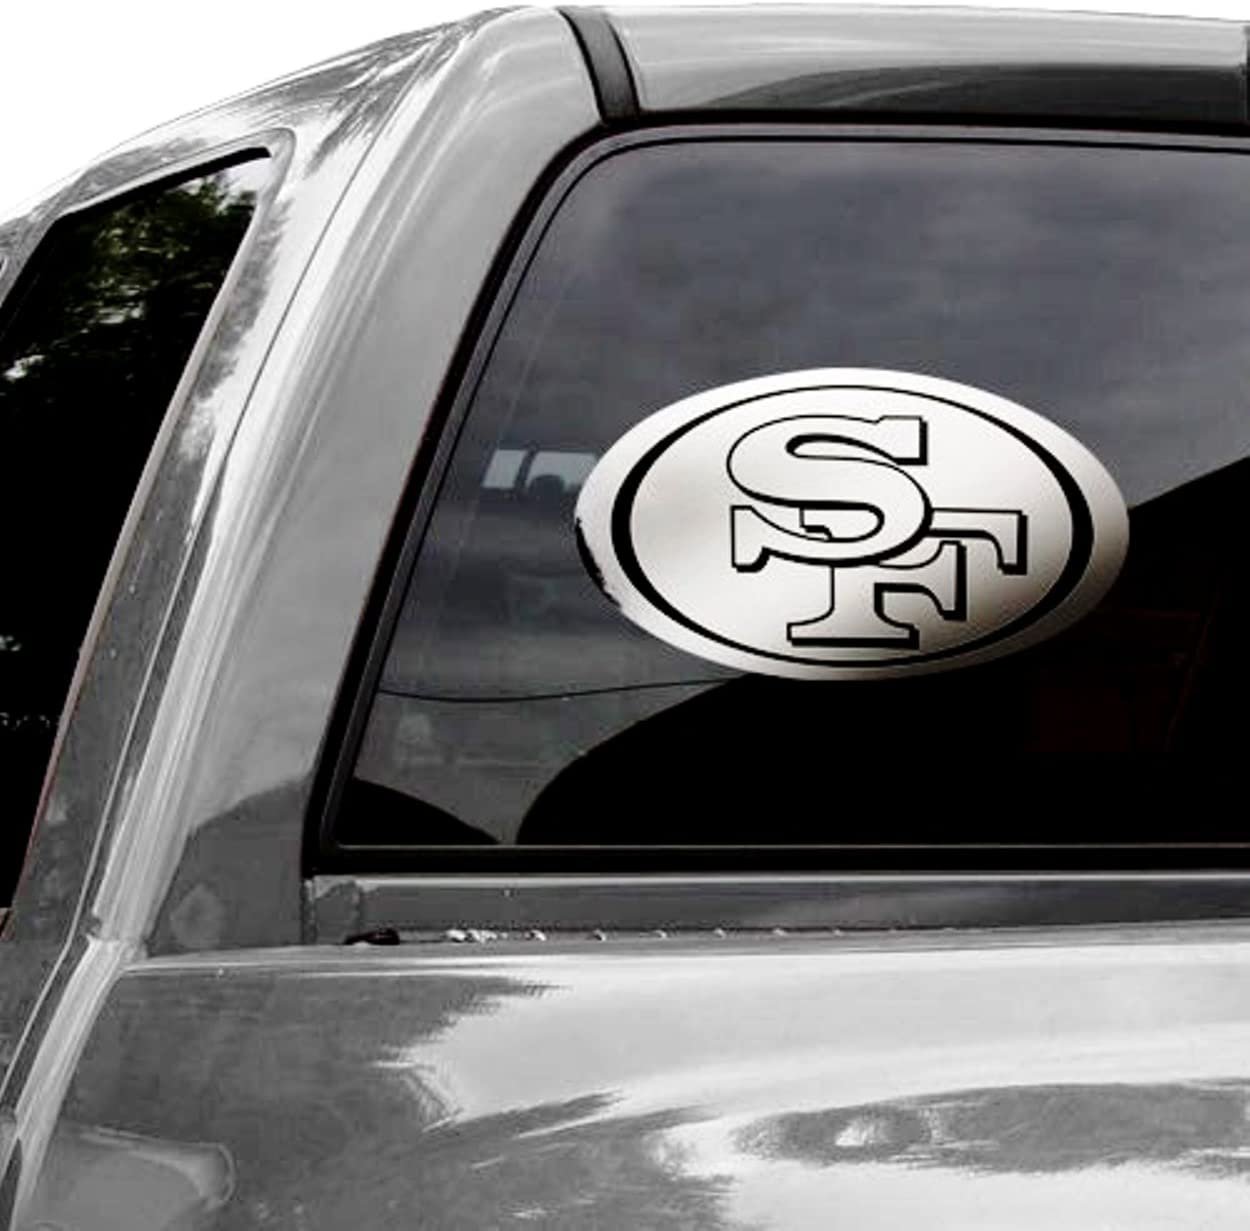 San Francisco 49ers 12 Inch Decal Sticker, Metallic Chrome Shimmer Design